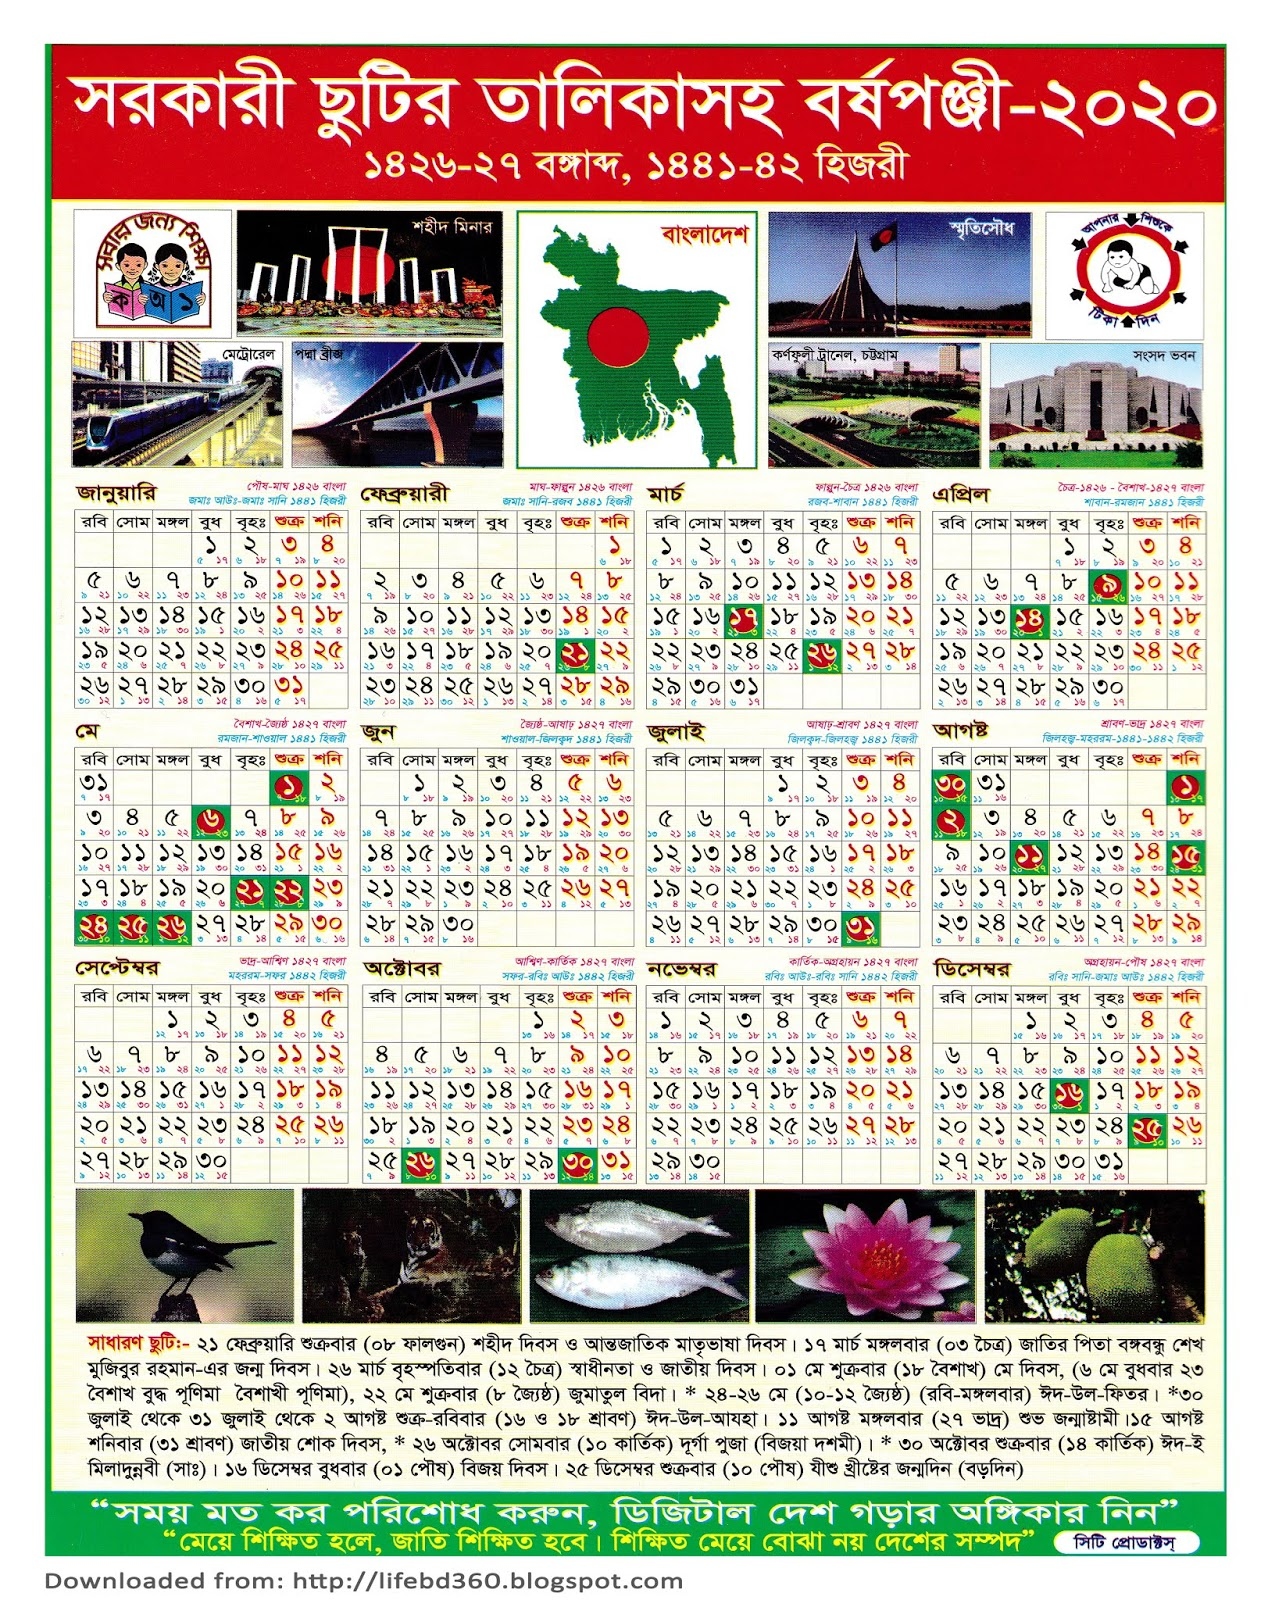 Islamic Calendar 2024 Bangladesh Calendar 2024 Ireland Printable - Free Printable 2024 Calendar With Holidays Bangladesh